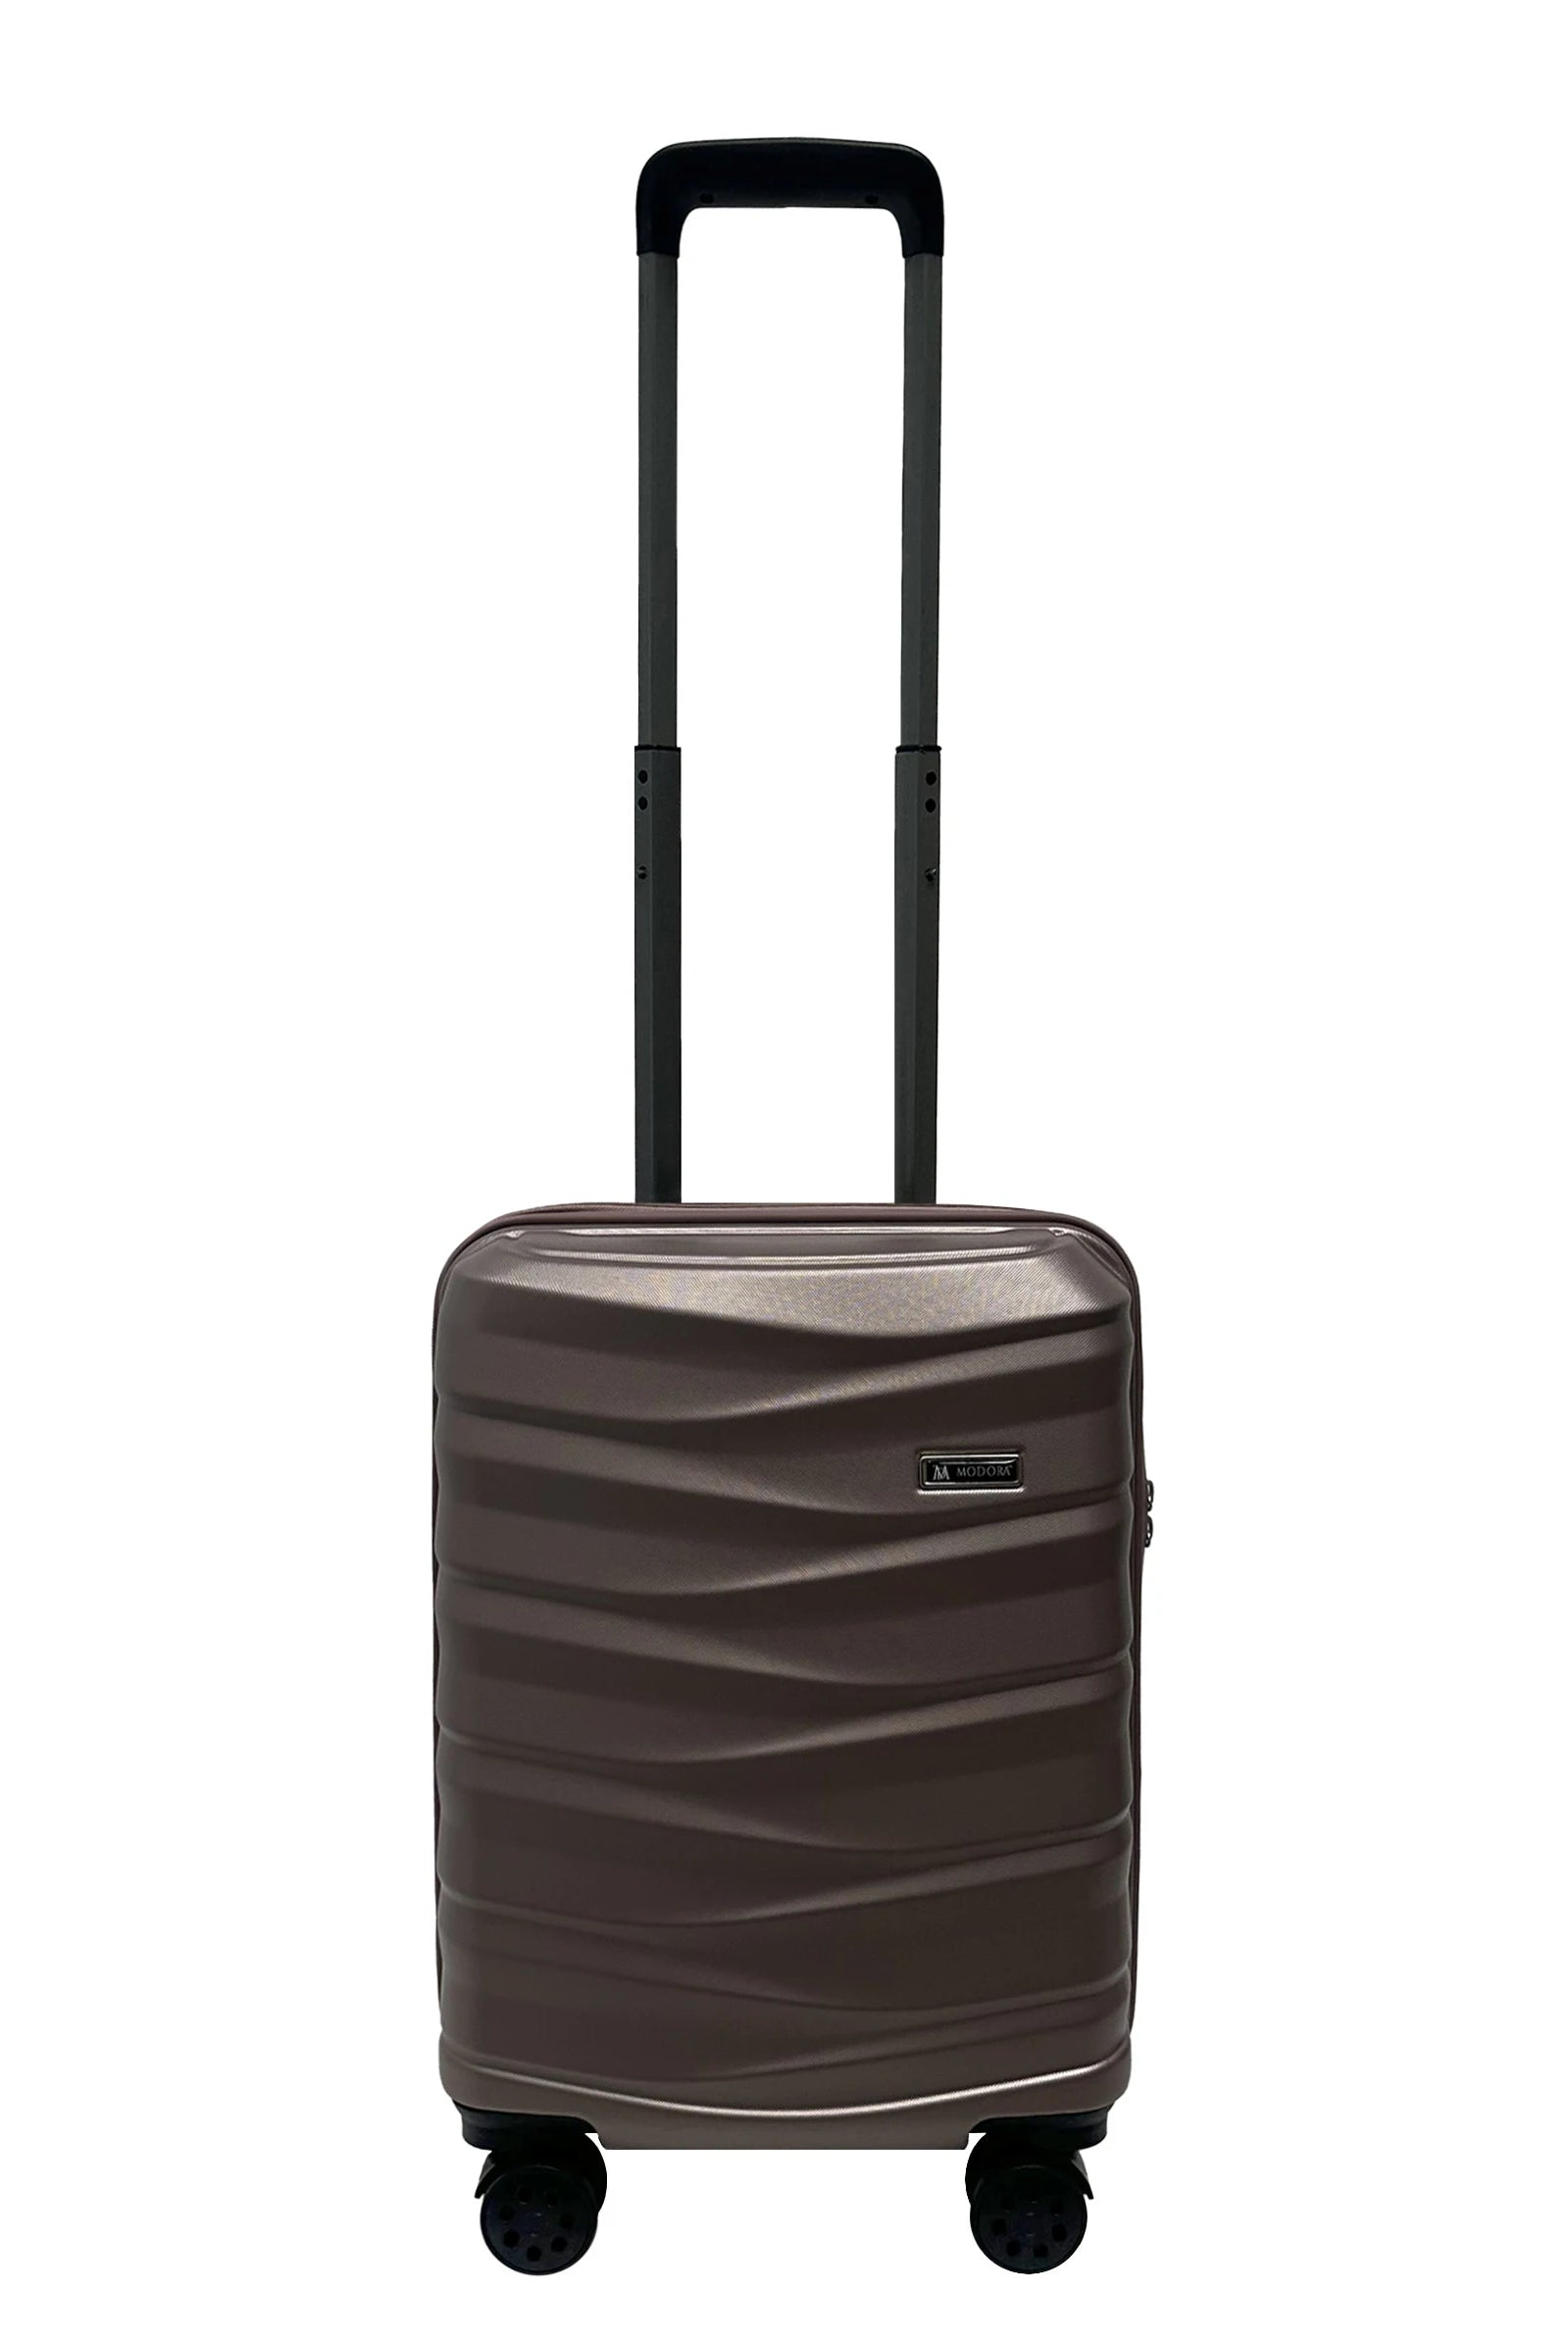 luggage cabin suitcase